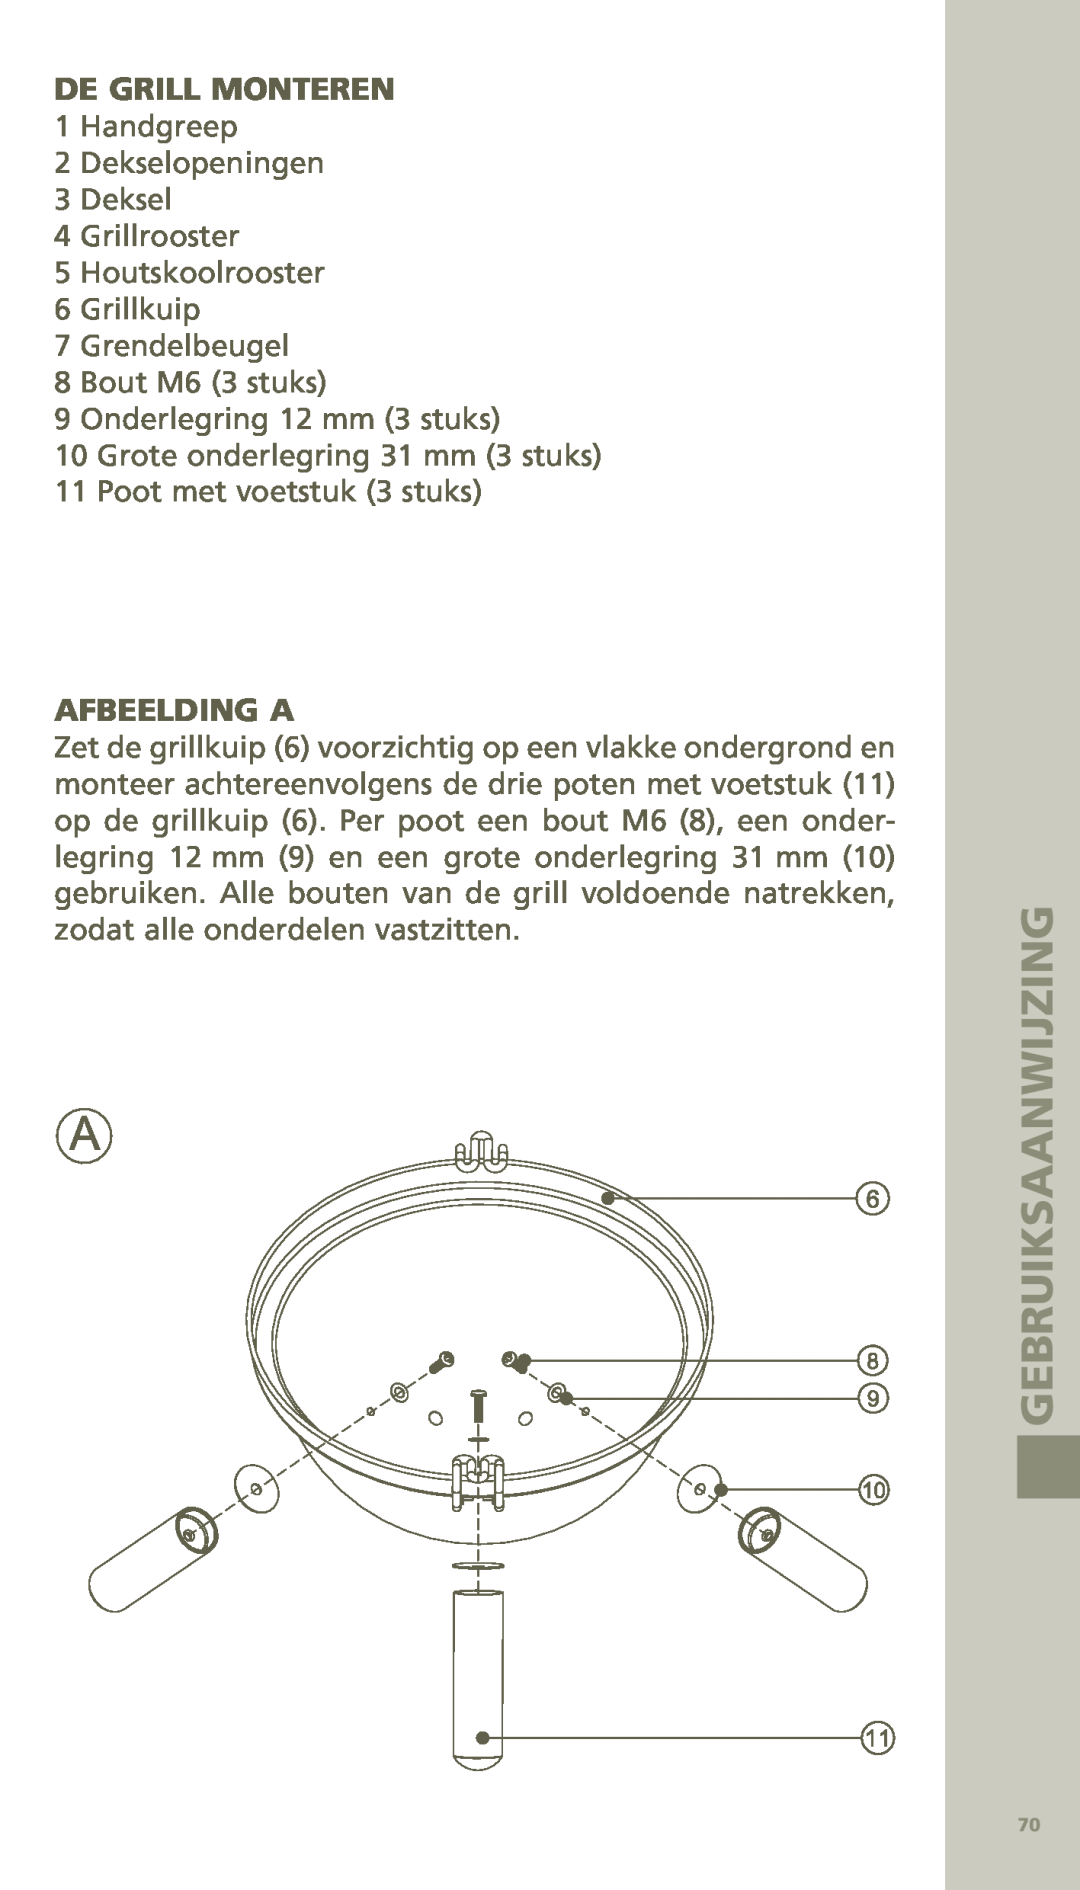 Bodum 11421 manual De Grill Monteren, Afbeelding A 